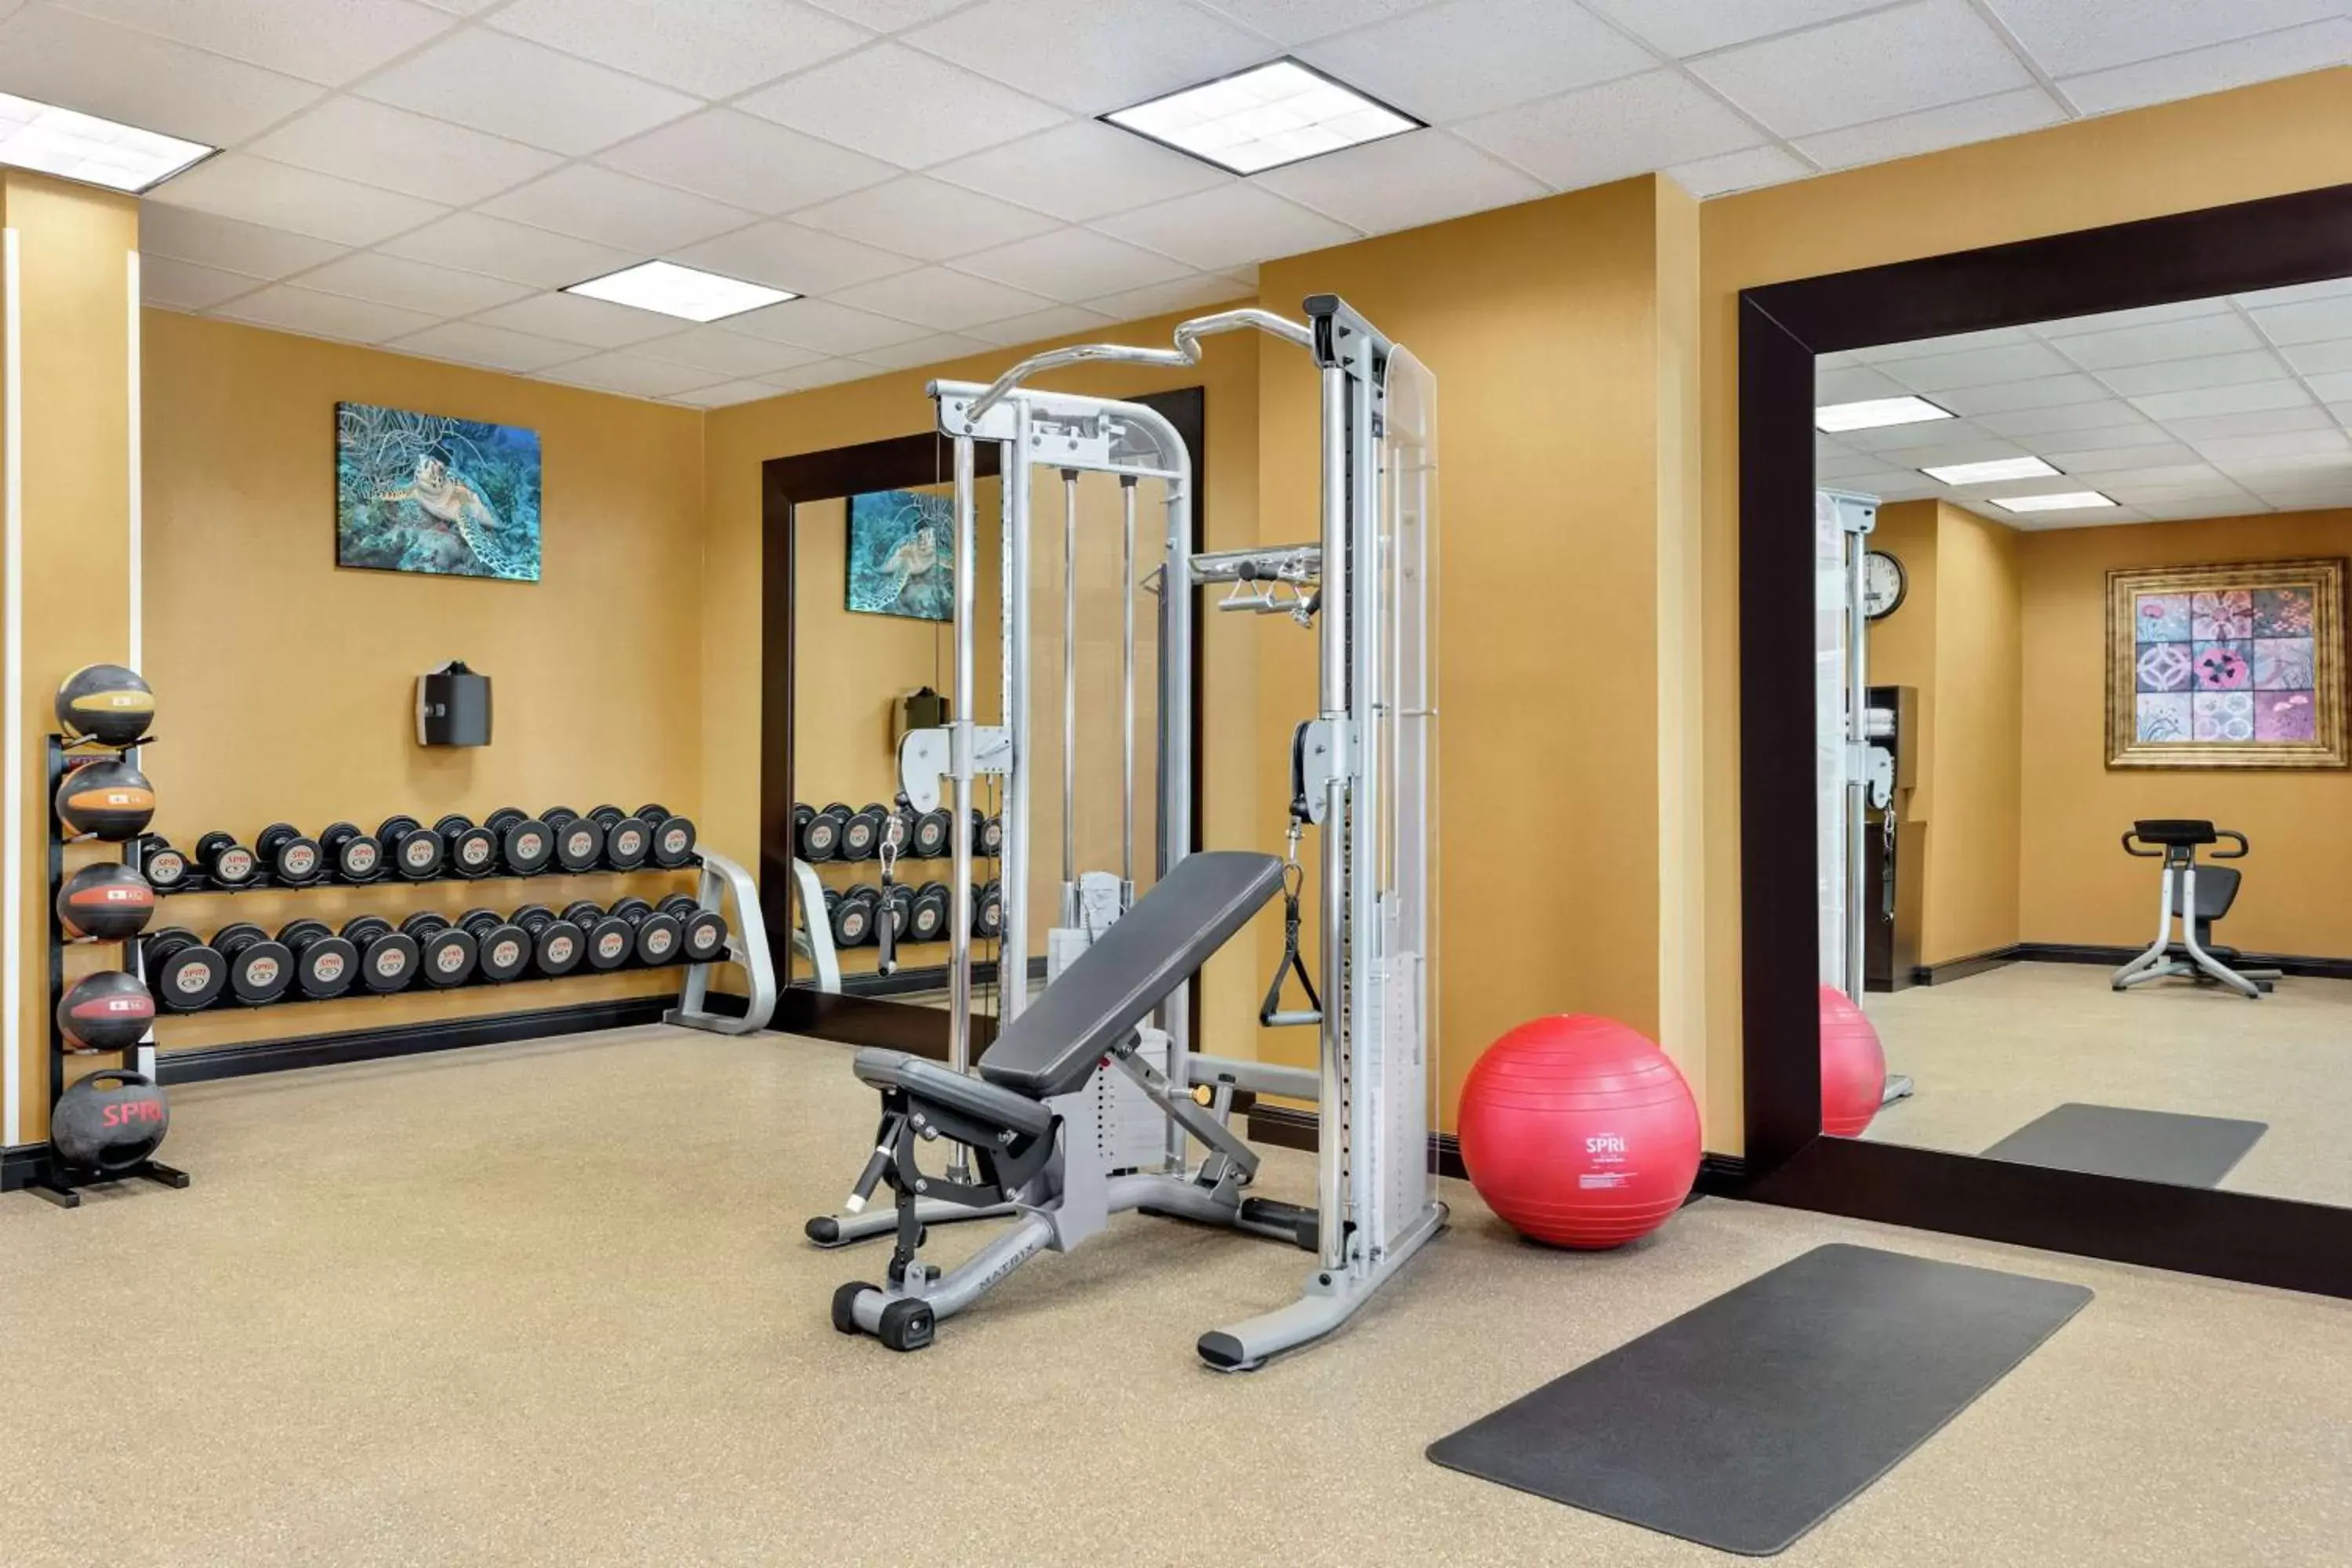 Fitness centre/facilities, Fitness Center/Facilities in Hilton Garden Inn South Padre Island